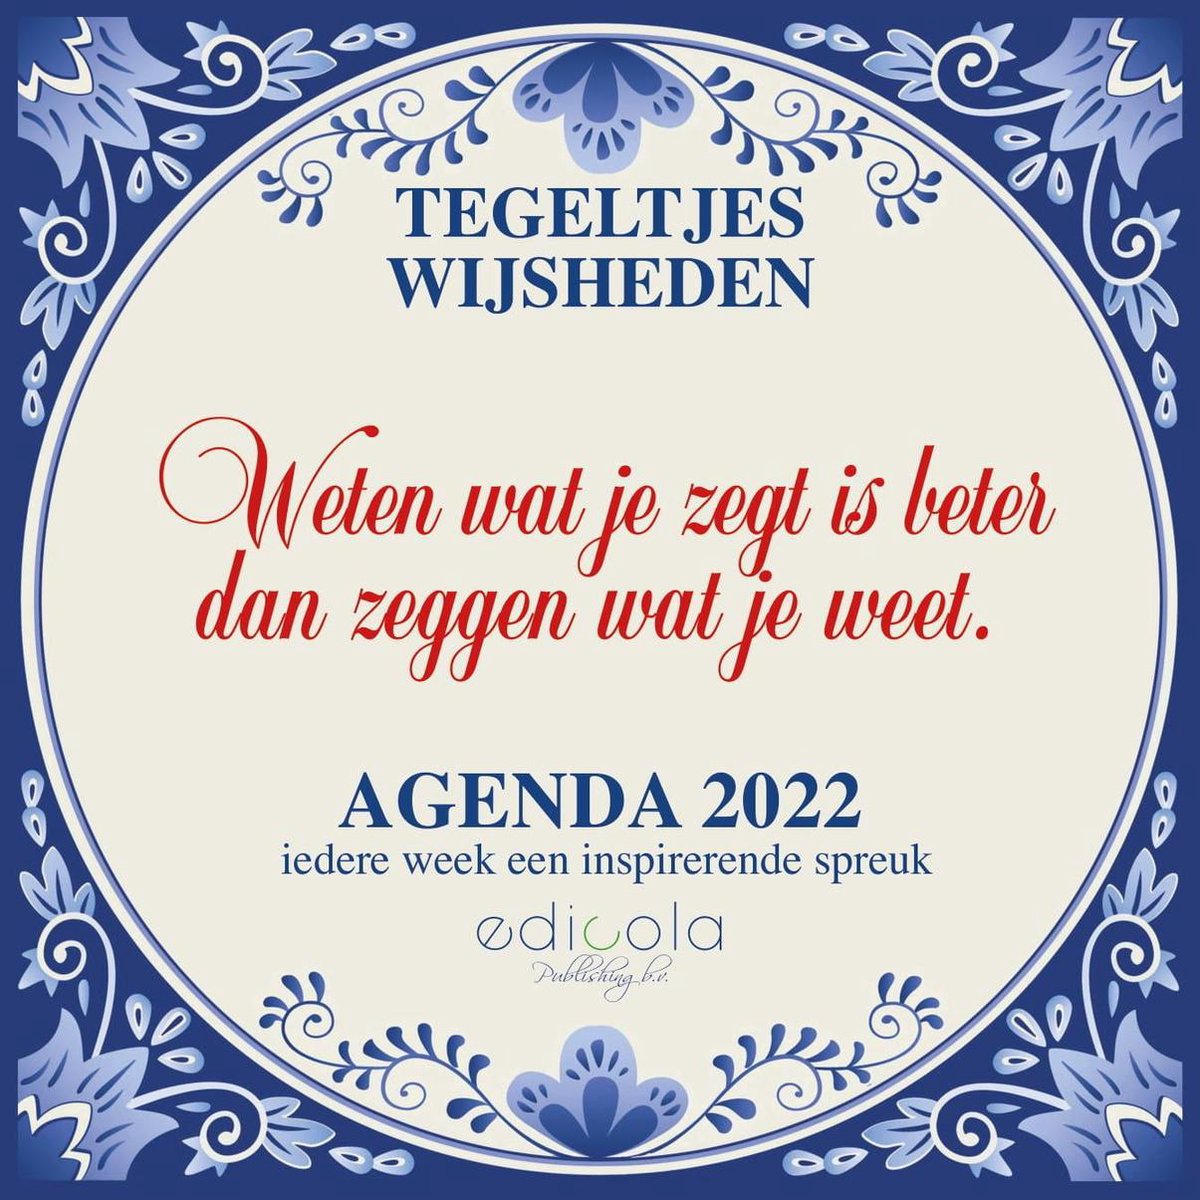 Tegeltjeswijsheden Agenda 2022 | bol.